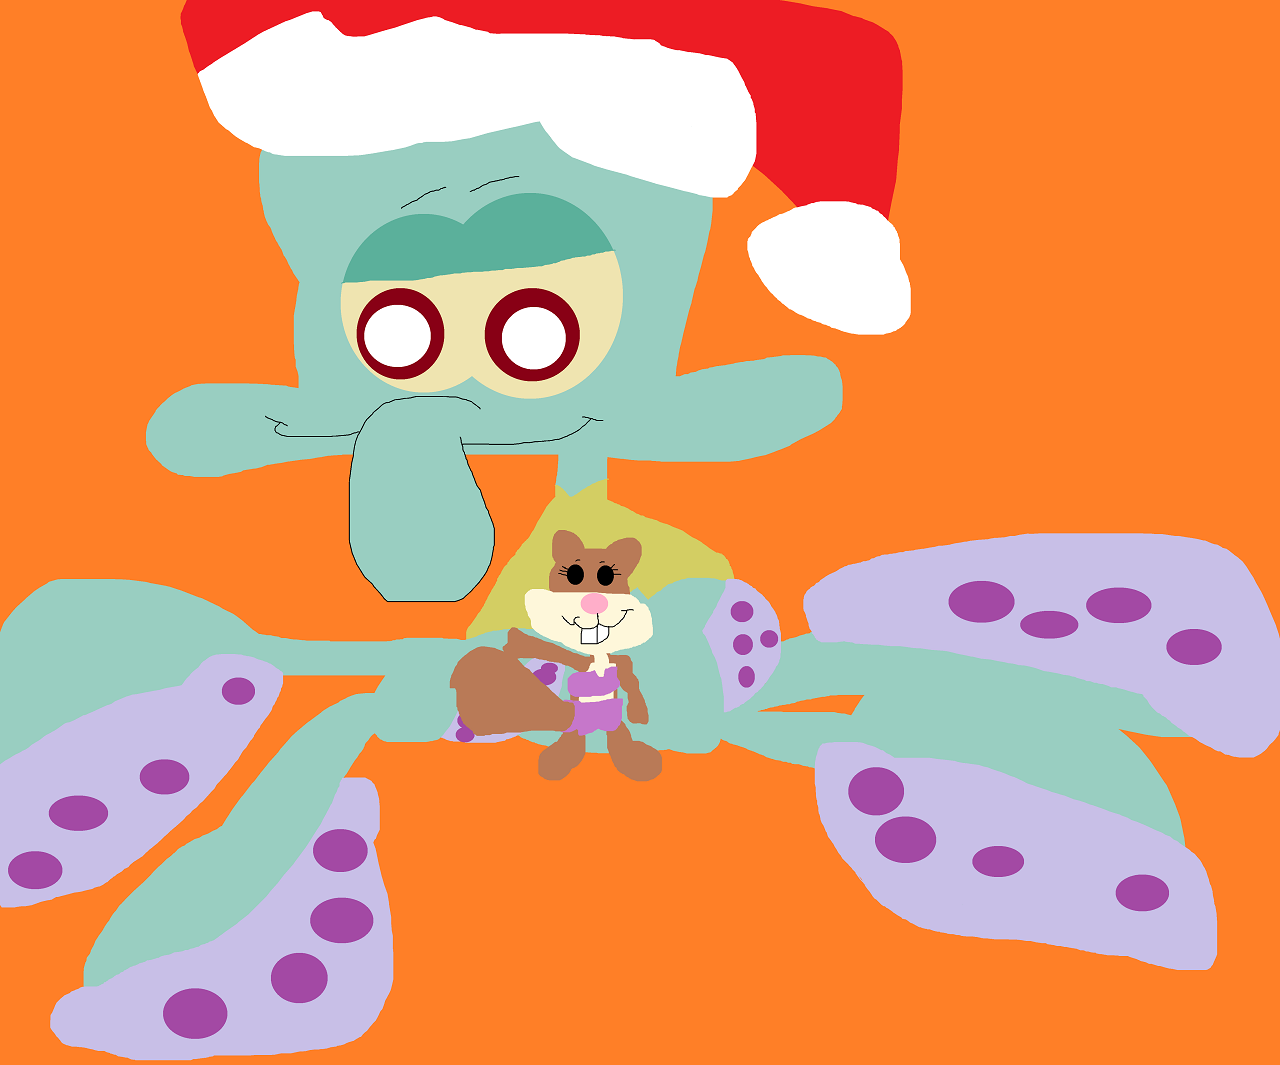 Squidward Got A Sandy Plushie For Christmas by Falconlobo